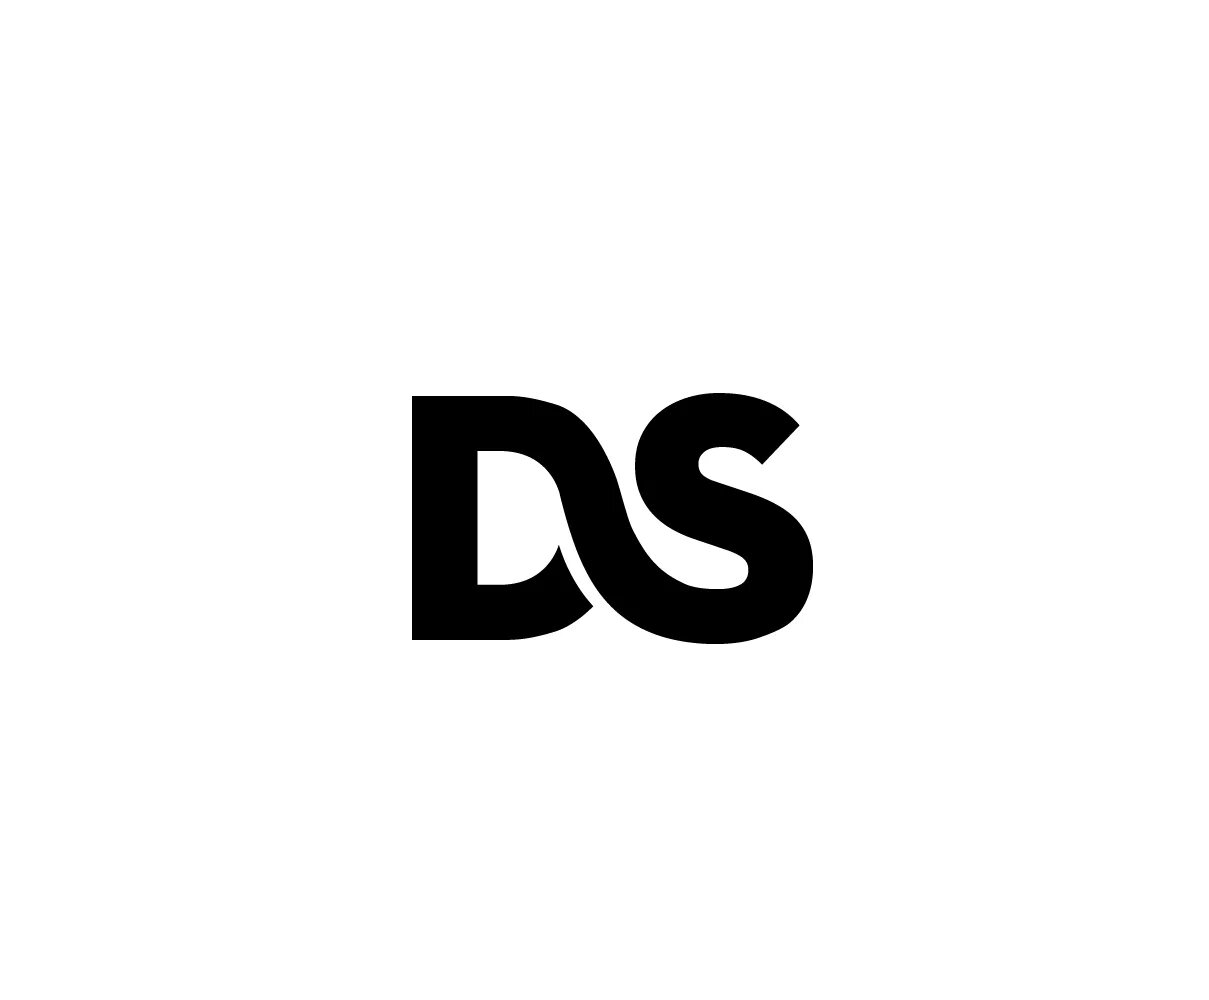 DS логотип. Логотип с буквами SD. Буква s для логотипа. Надпись DS. Буквы берг